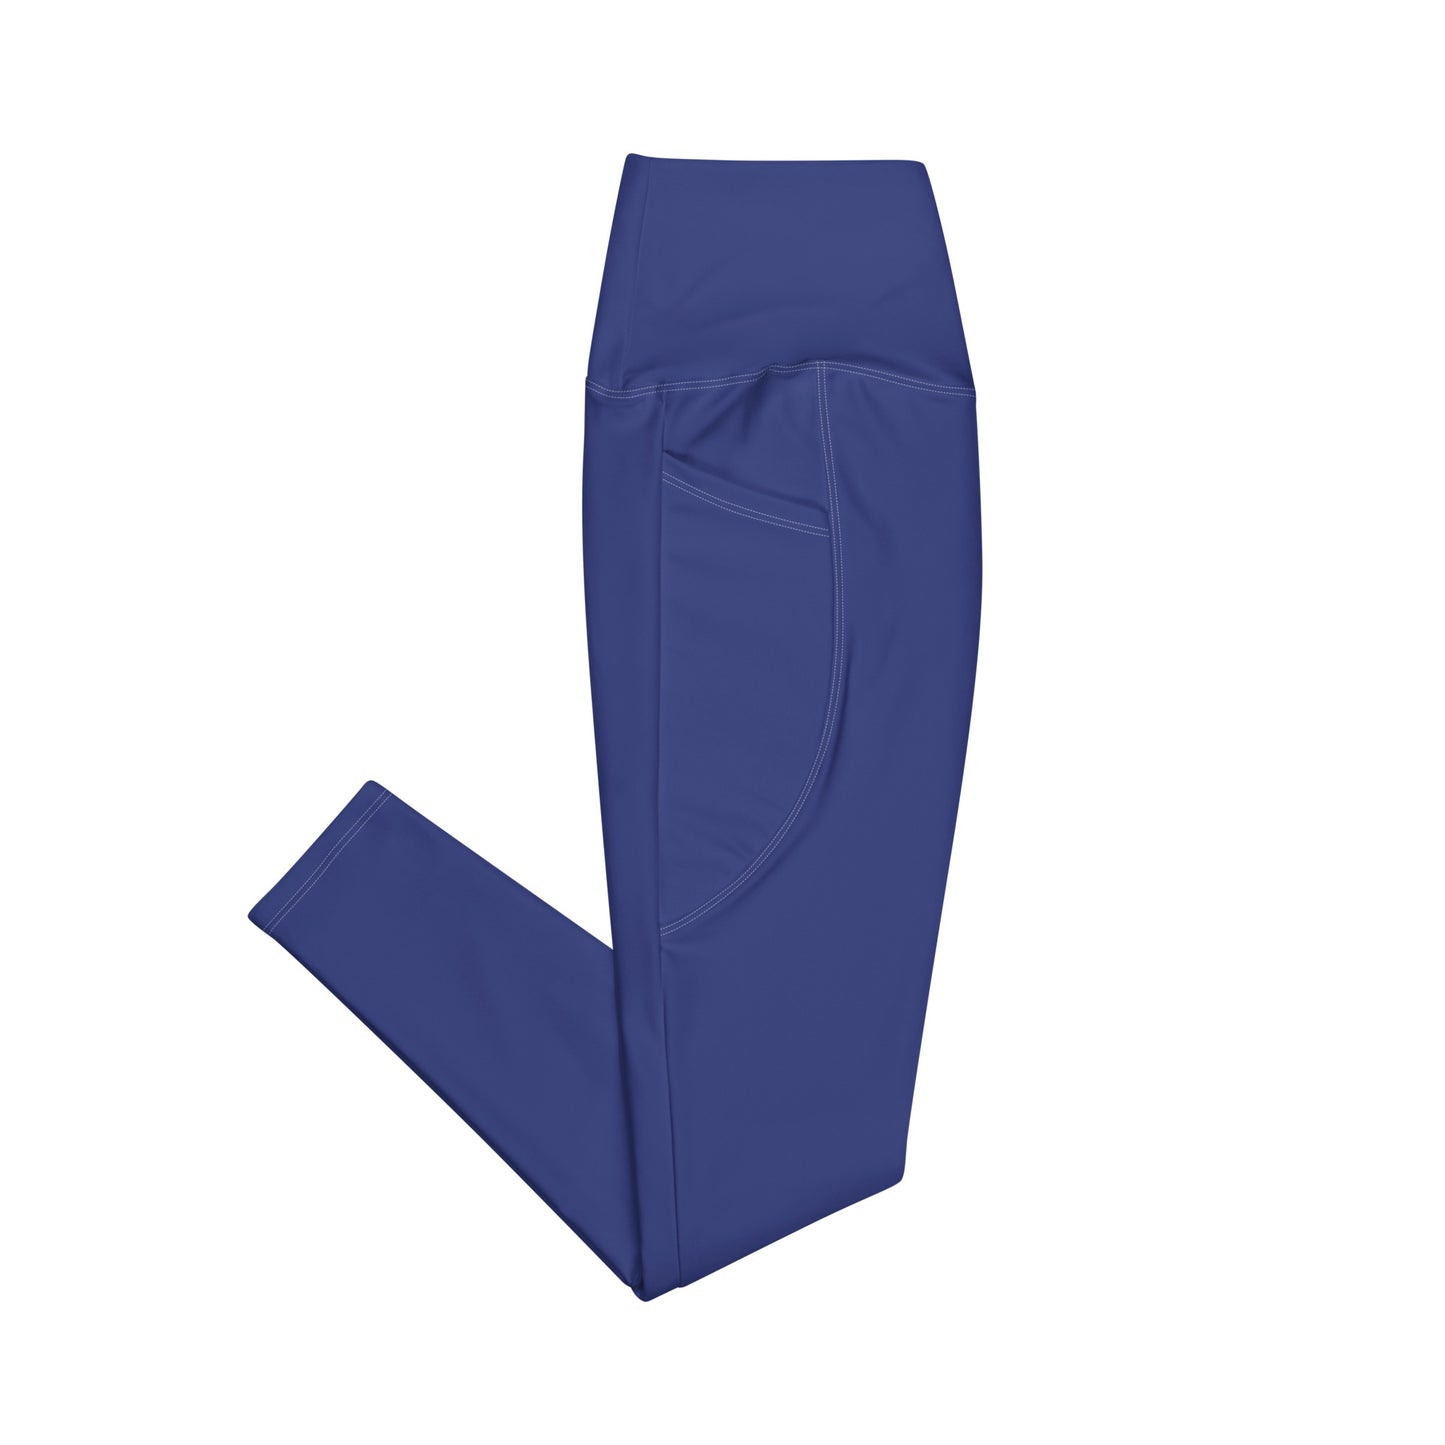 Monopoli Solid Blue High Waist 7/8 Recycled Yoga Leggings / Yoga Pants with Pockets